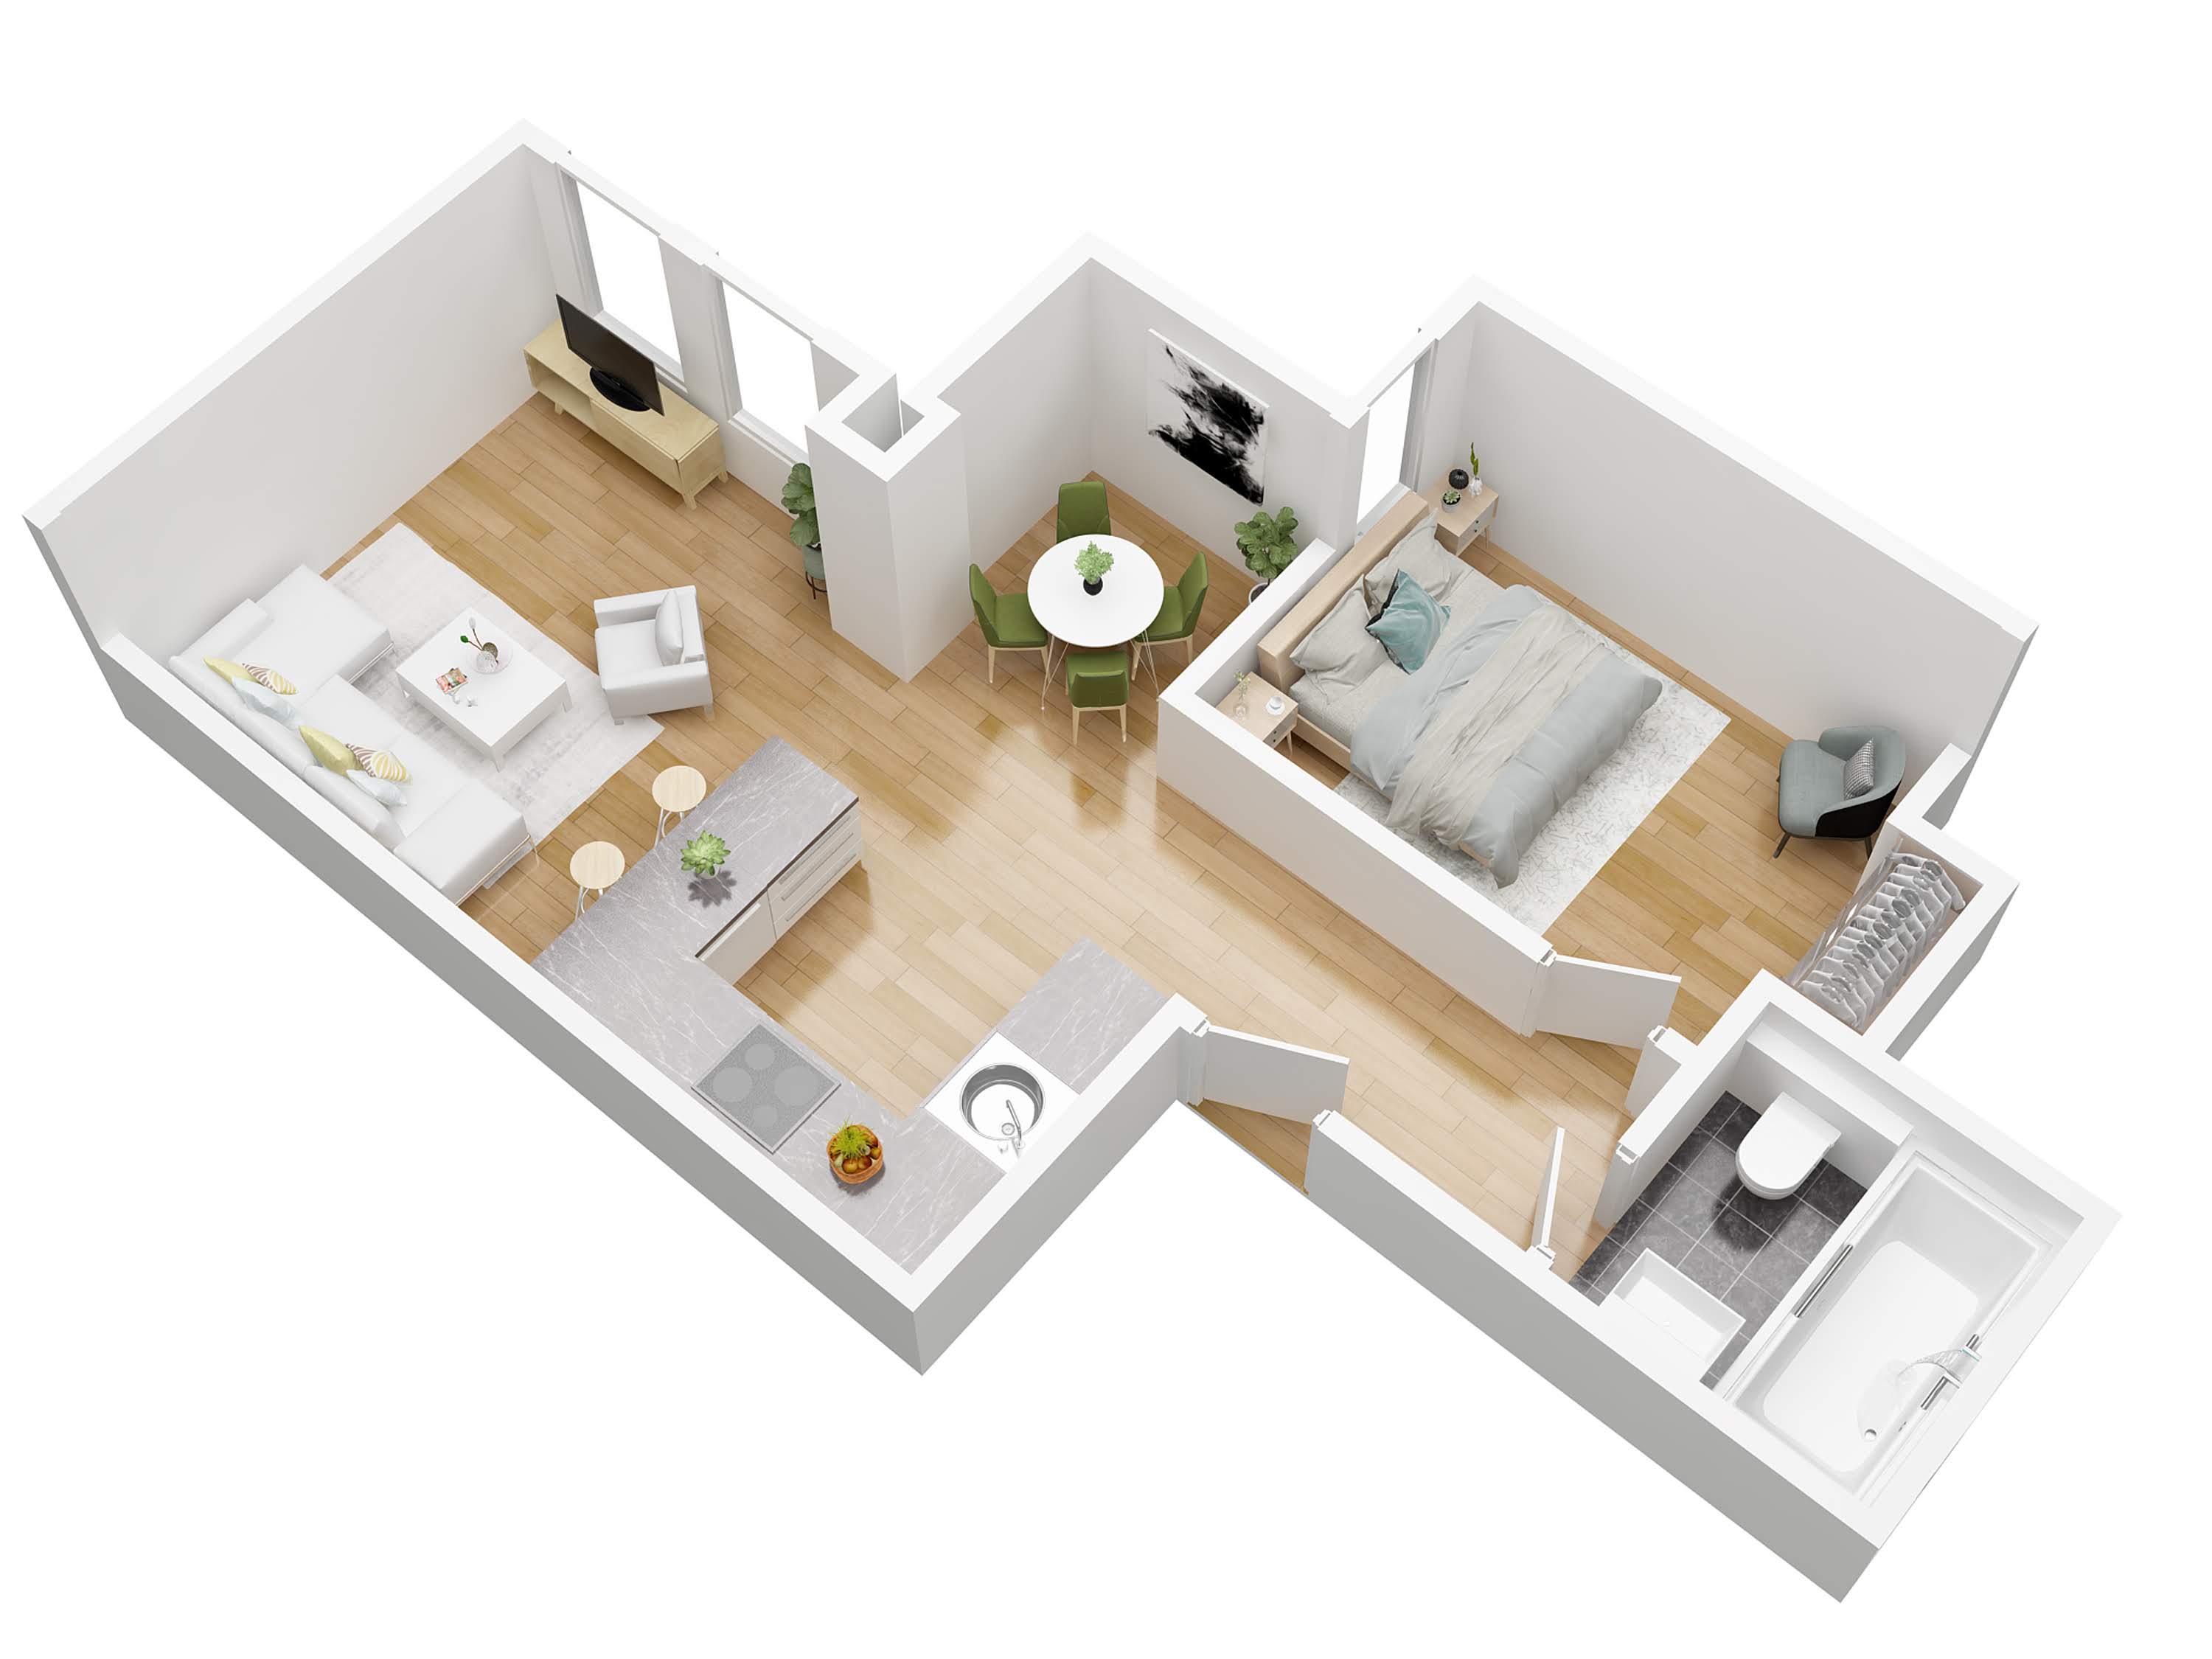 3D Floor Plans for Residential Properties